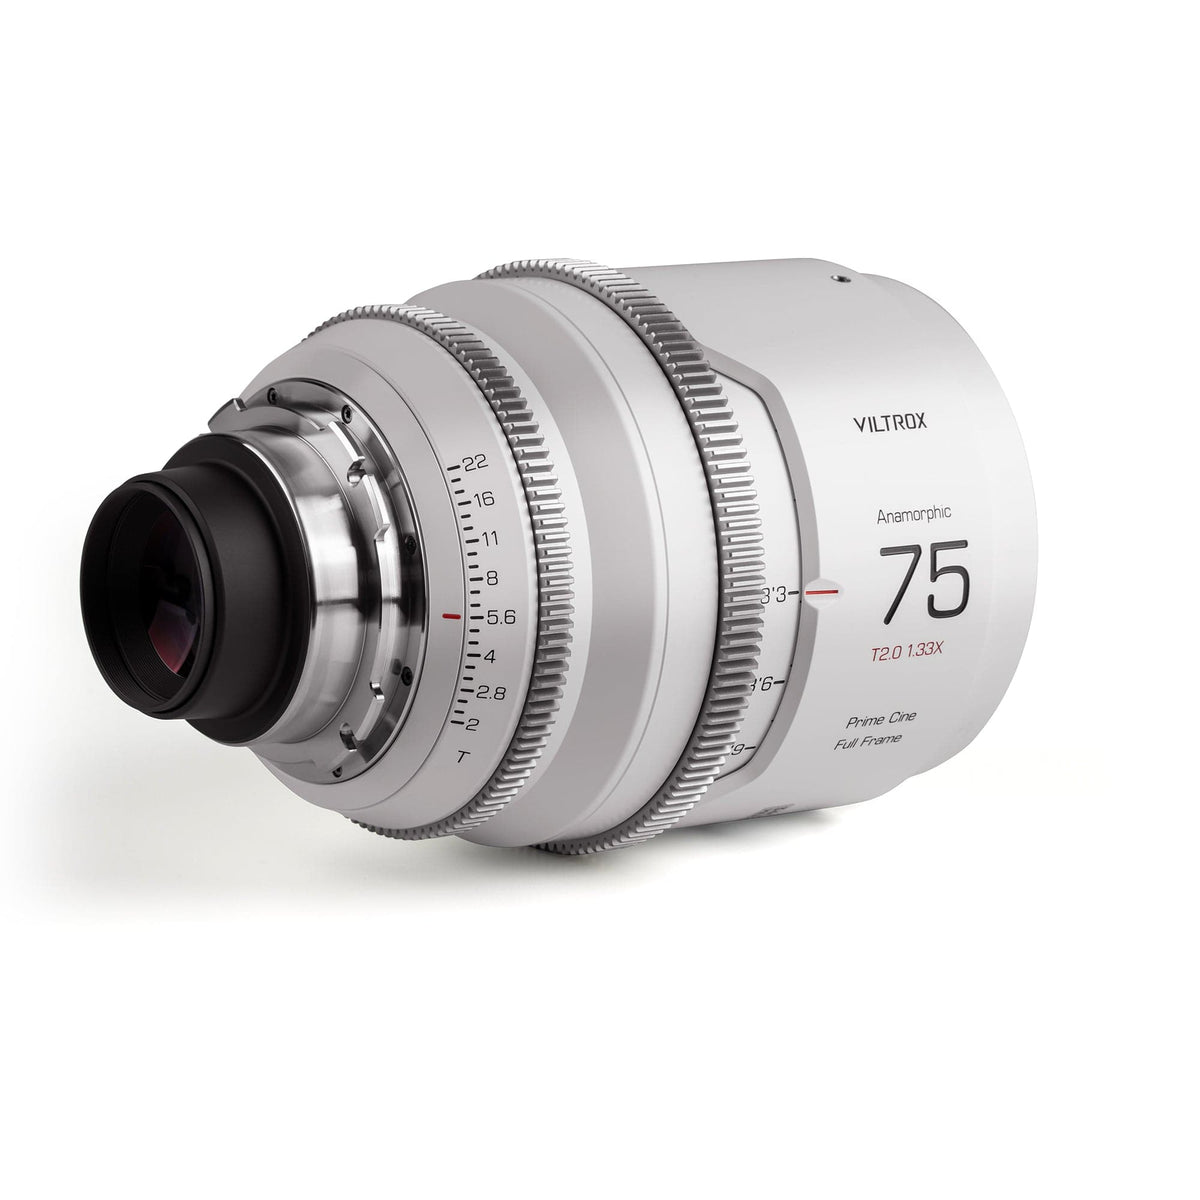 VILTROX New EPIC Series 35mm 50mm 75mm T2.0 1.33X PL Mount Anamorphic Prime Cine Lens